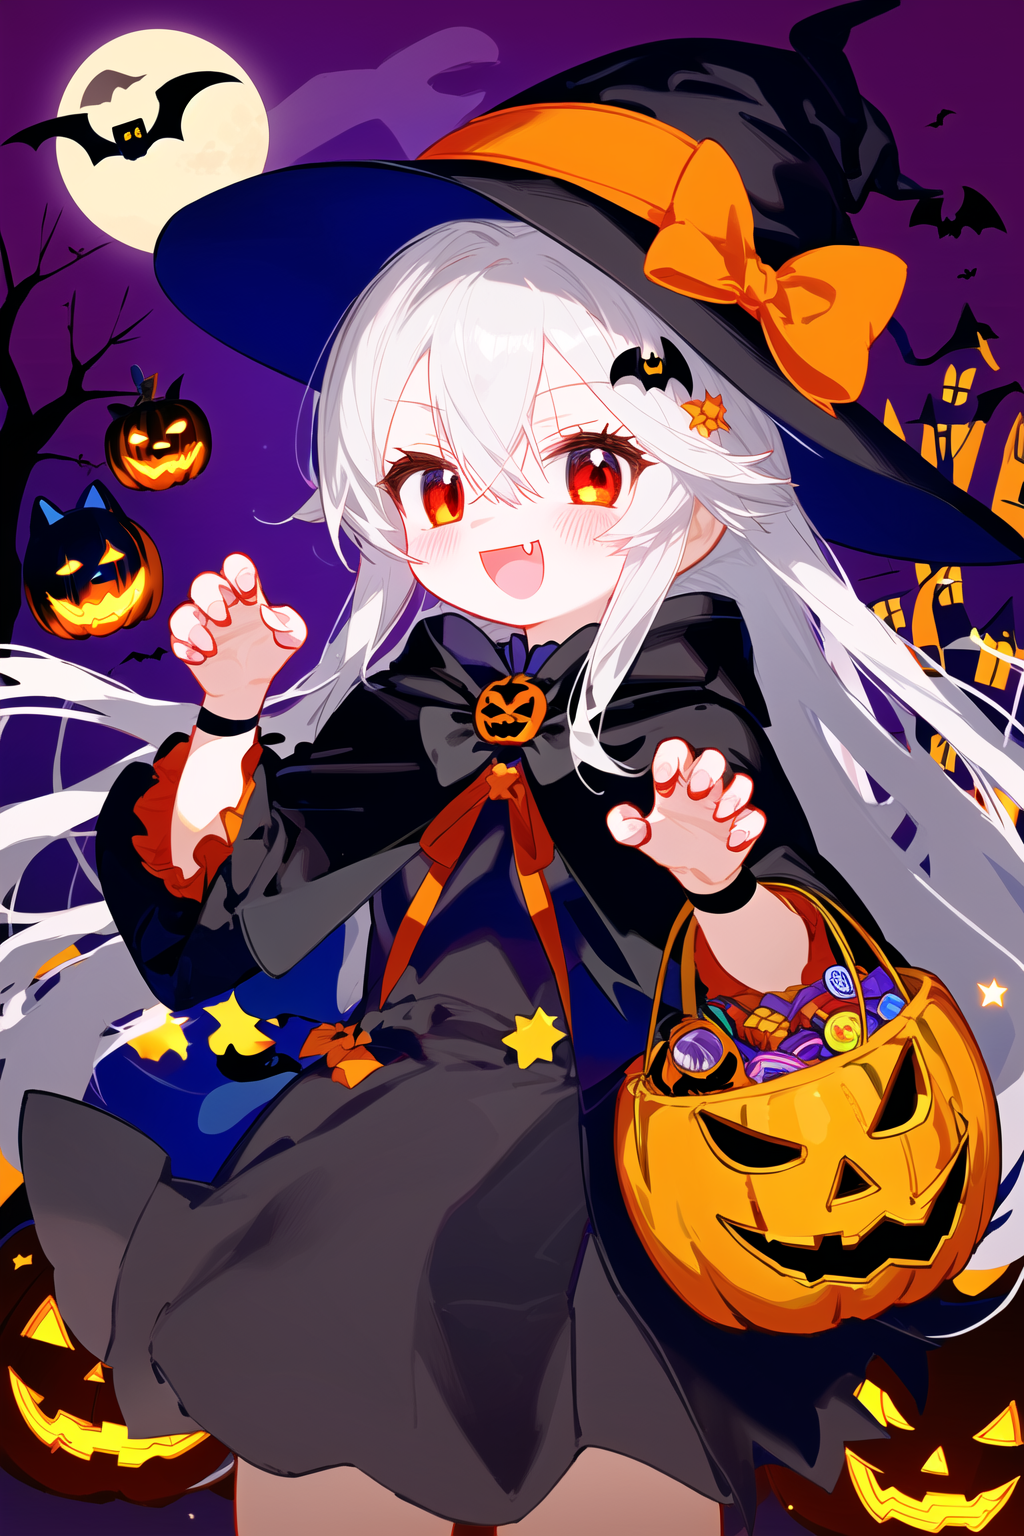 jack-o'-lantern, witch hat, halloween, pumpkin, hat, ghost, halloween bucket, rating:safe, bat, 1girl, halloween costume, ...